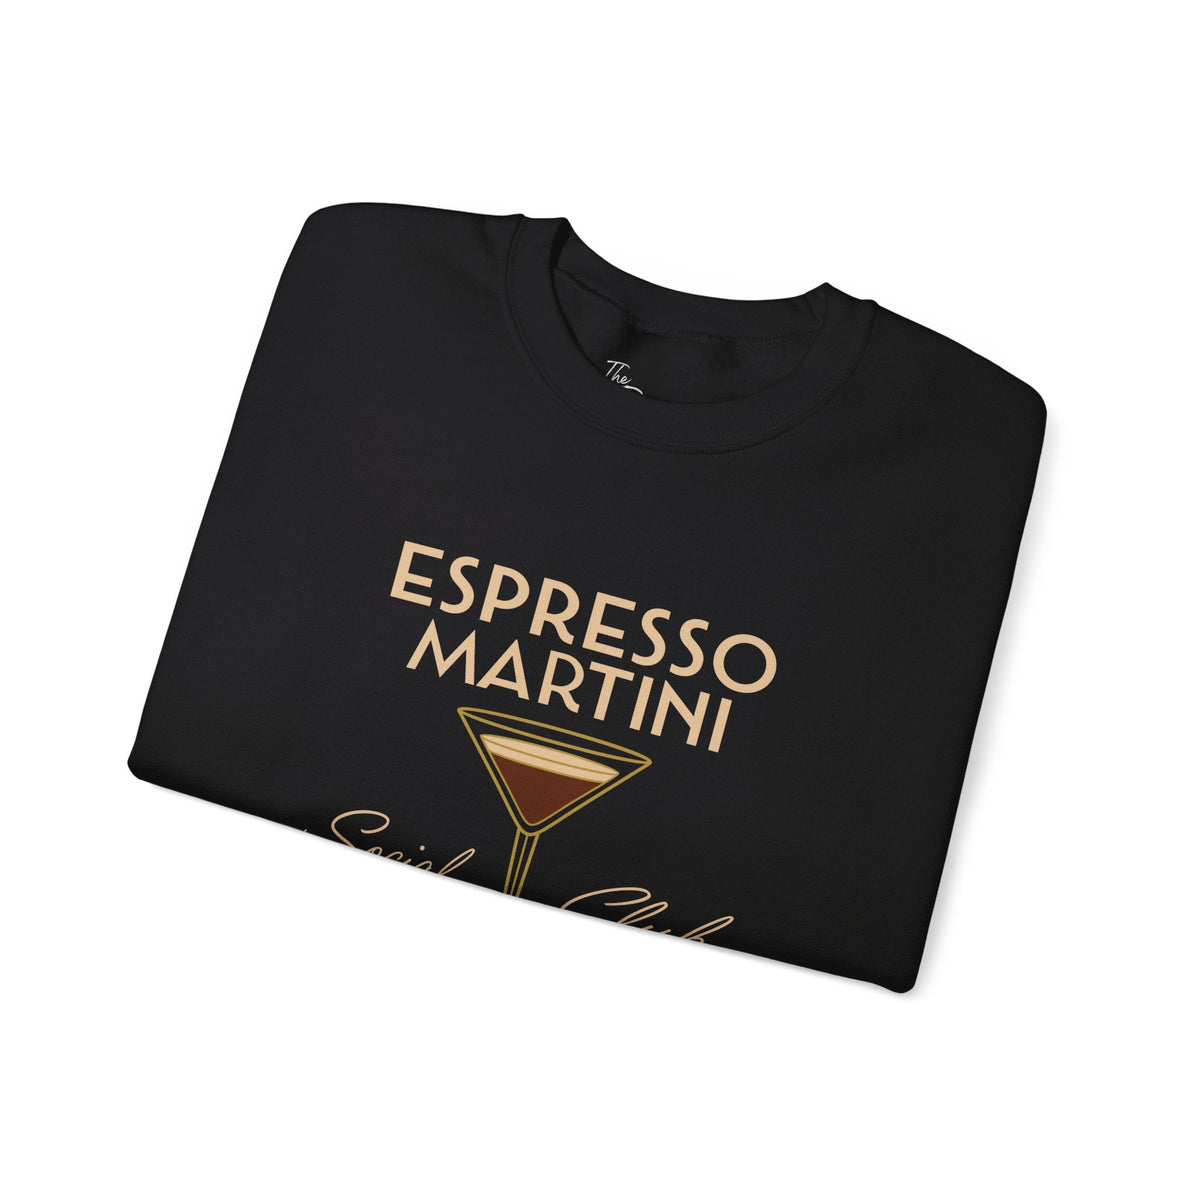 Espresso Martini Social Club Sweatshirt | Girls Night | Cocktail Lover | Martini's Sweatshirt TheFringeCultureCollective